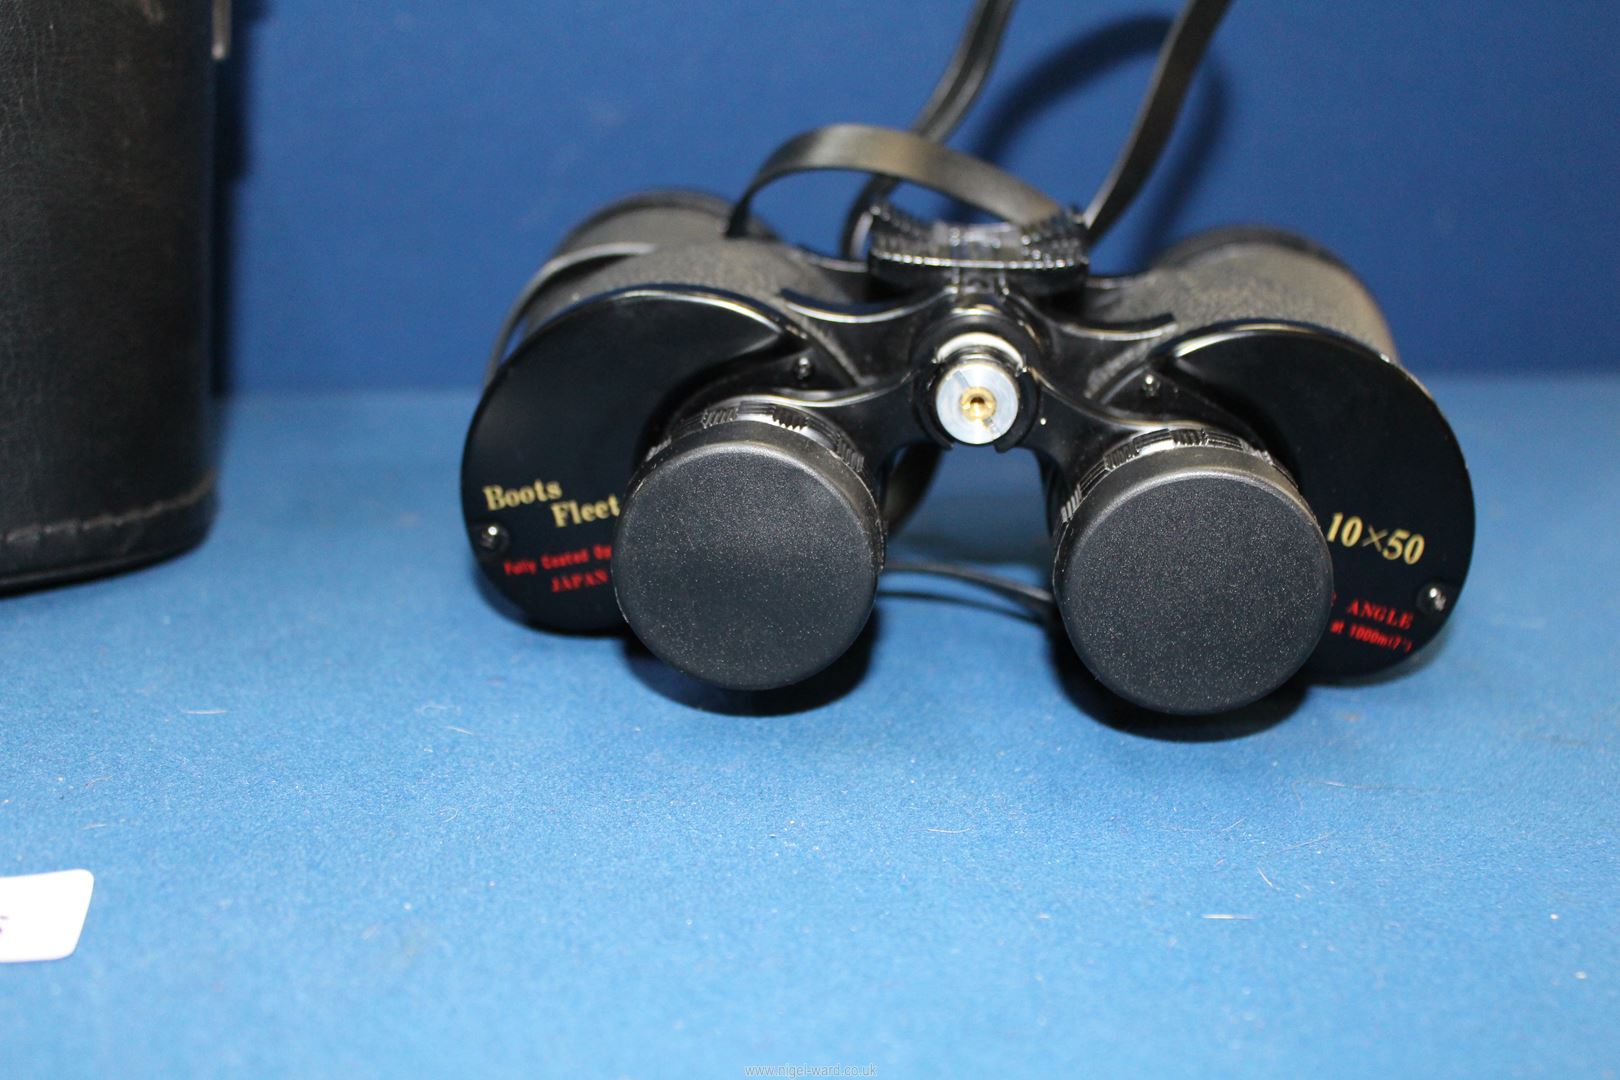 A pair of Boots Fleet 10 x 50 Binoculars in case. - Image 2 of 2